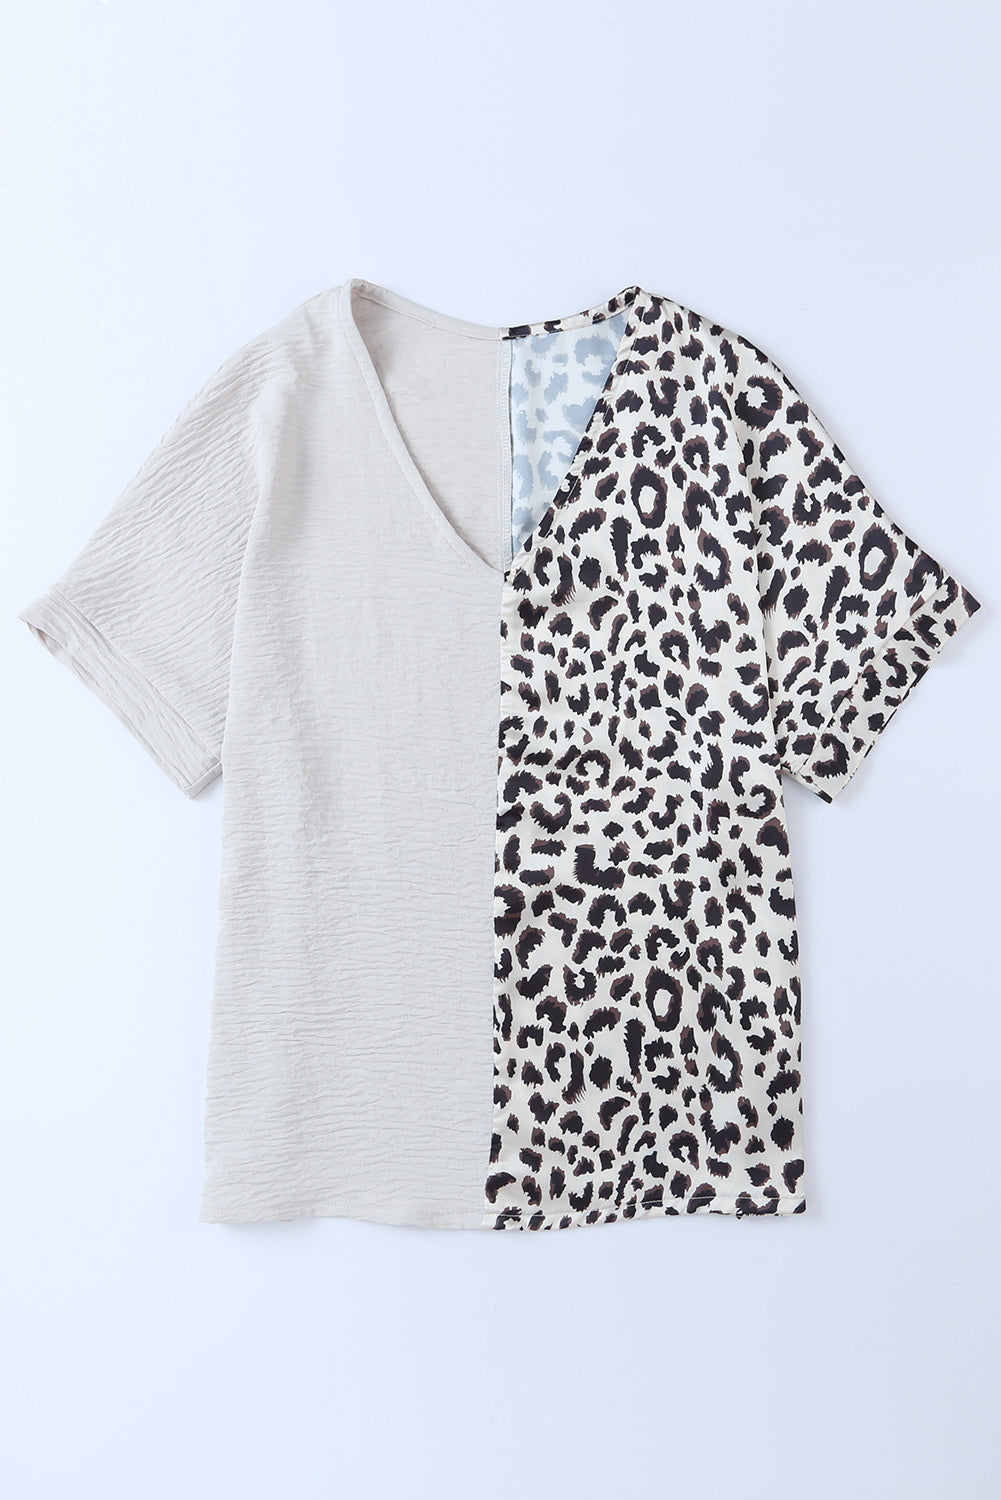 Leopard Color Block V-Neck Blouse - Women’s Clothing & Accessories - Shirts & Tops - 7 - 2024